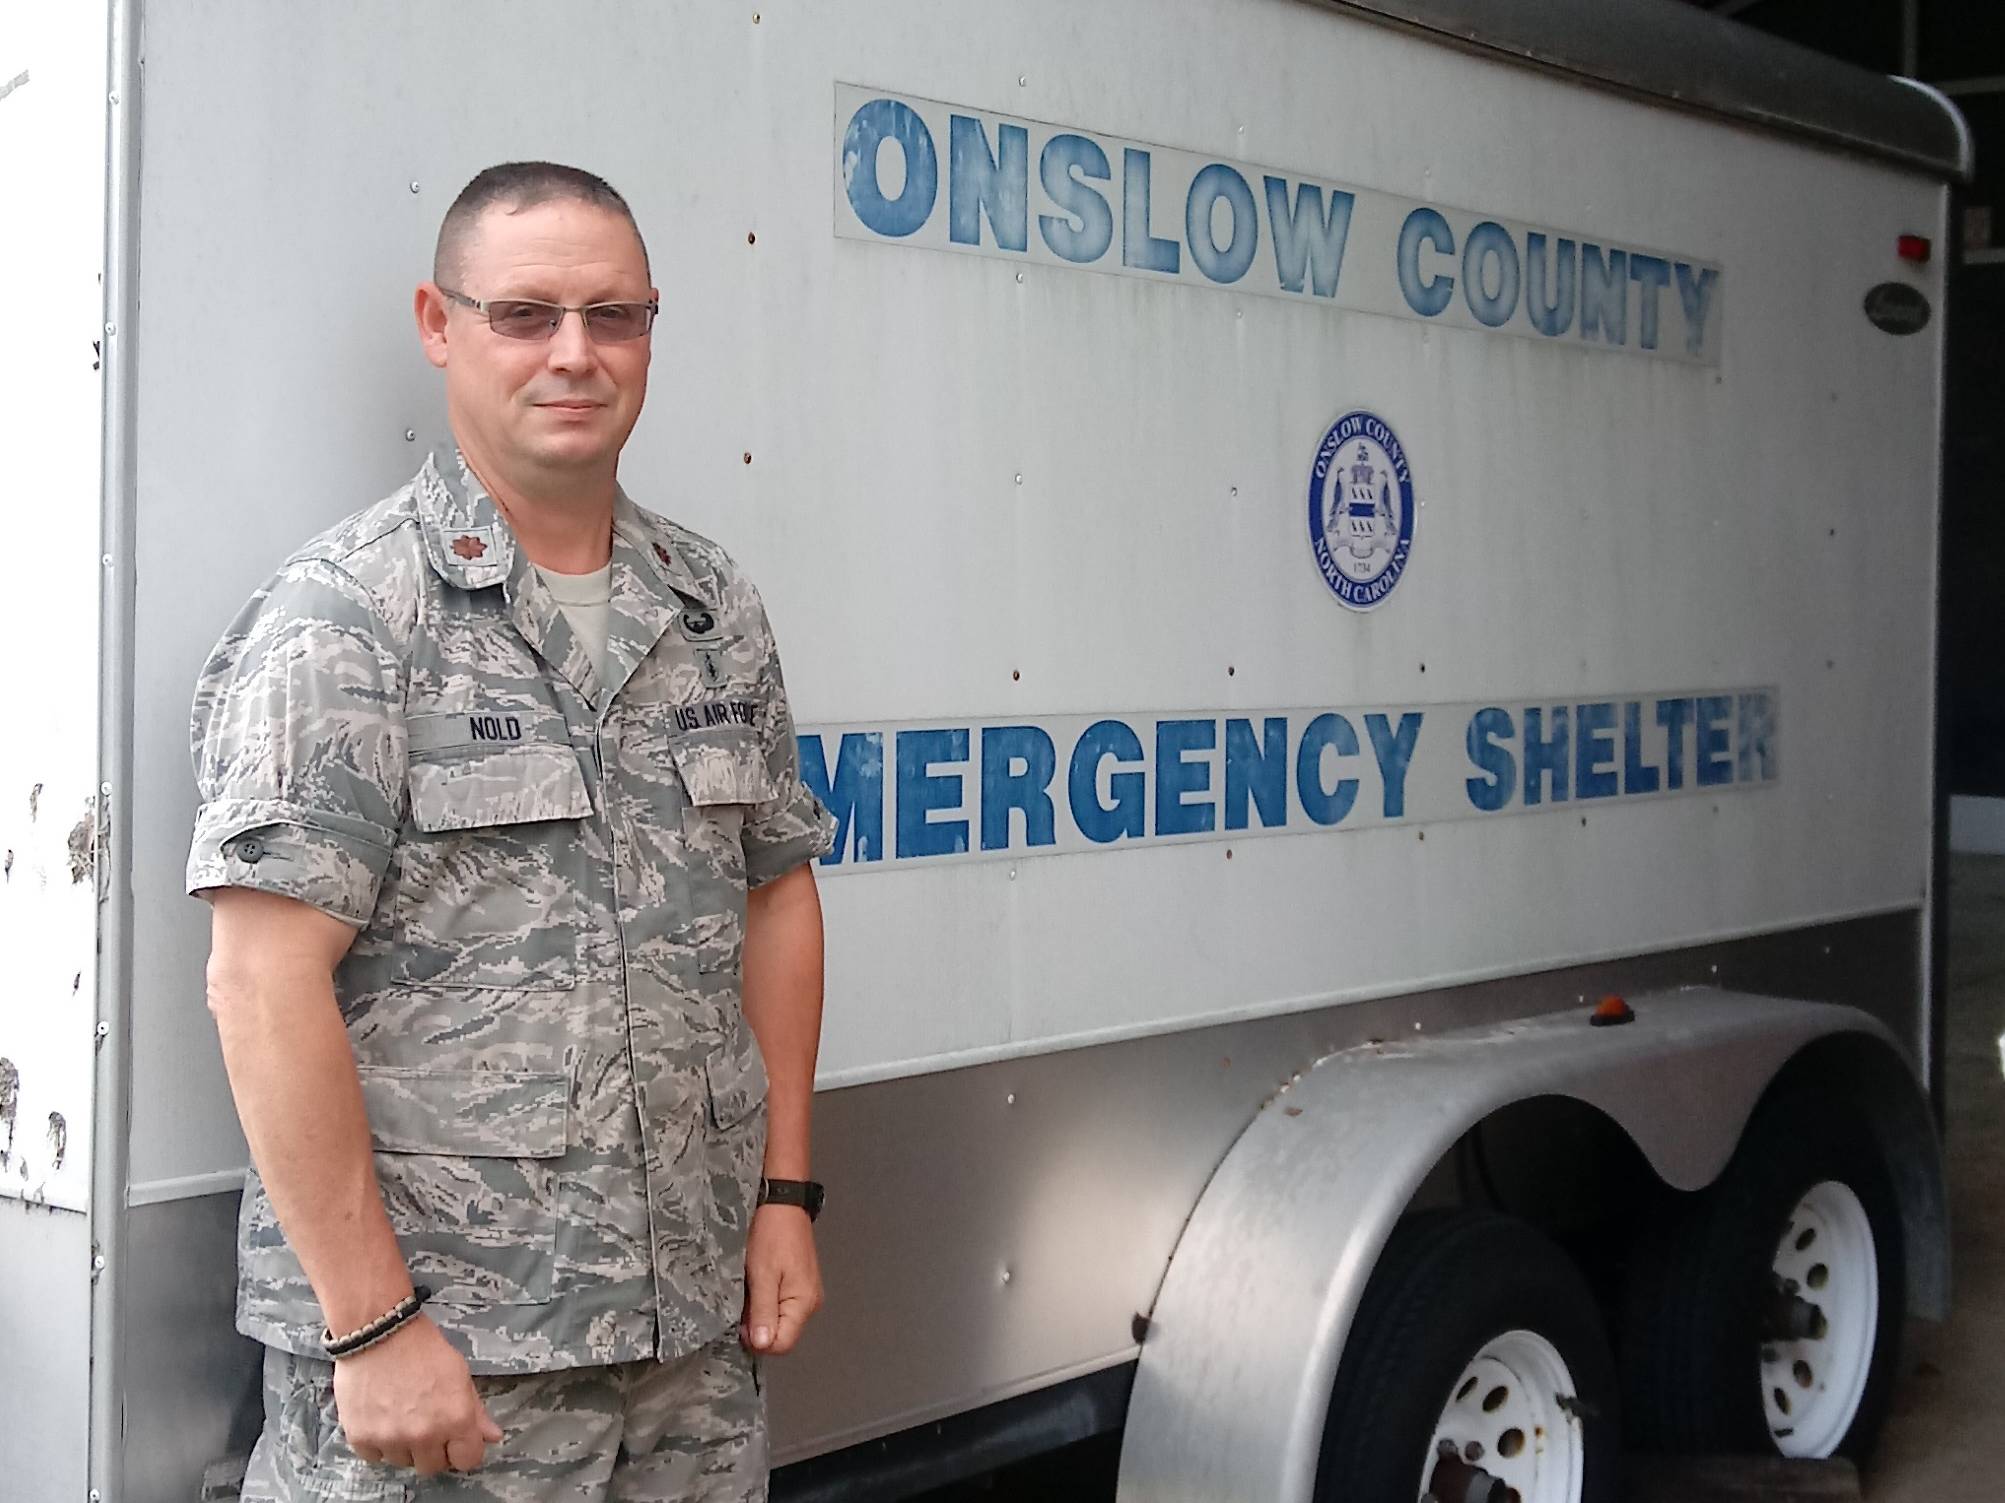 Richard Nold volunteered for hurricane relief in North Carolina